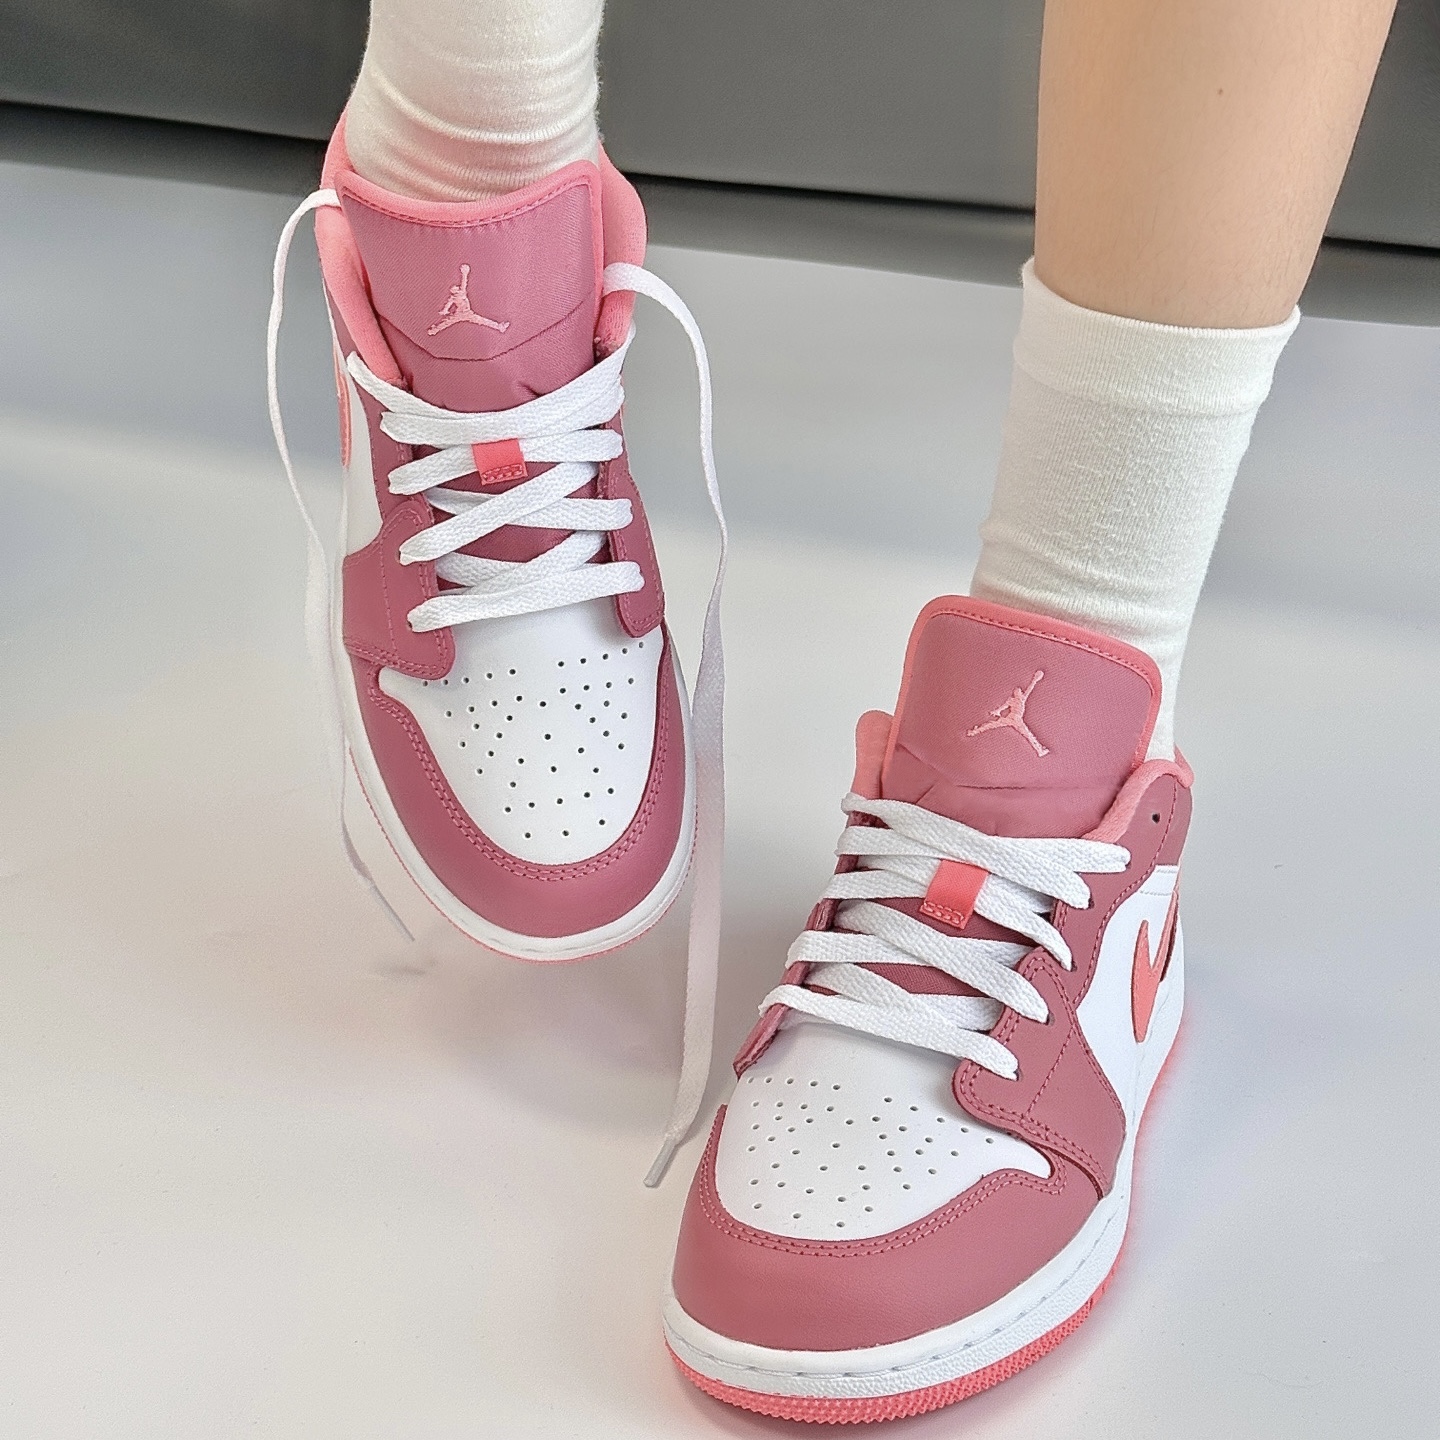 NIKE AIR JORDAN 1 GS 草莓粉粉紅大童鞋553560-616 / 預購